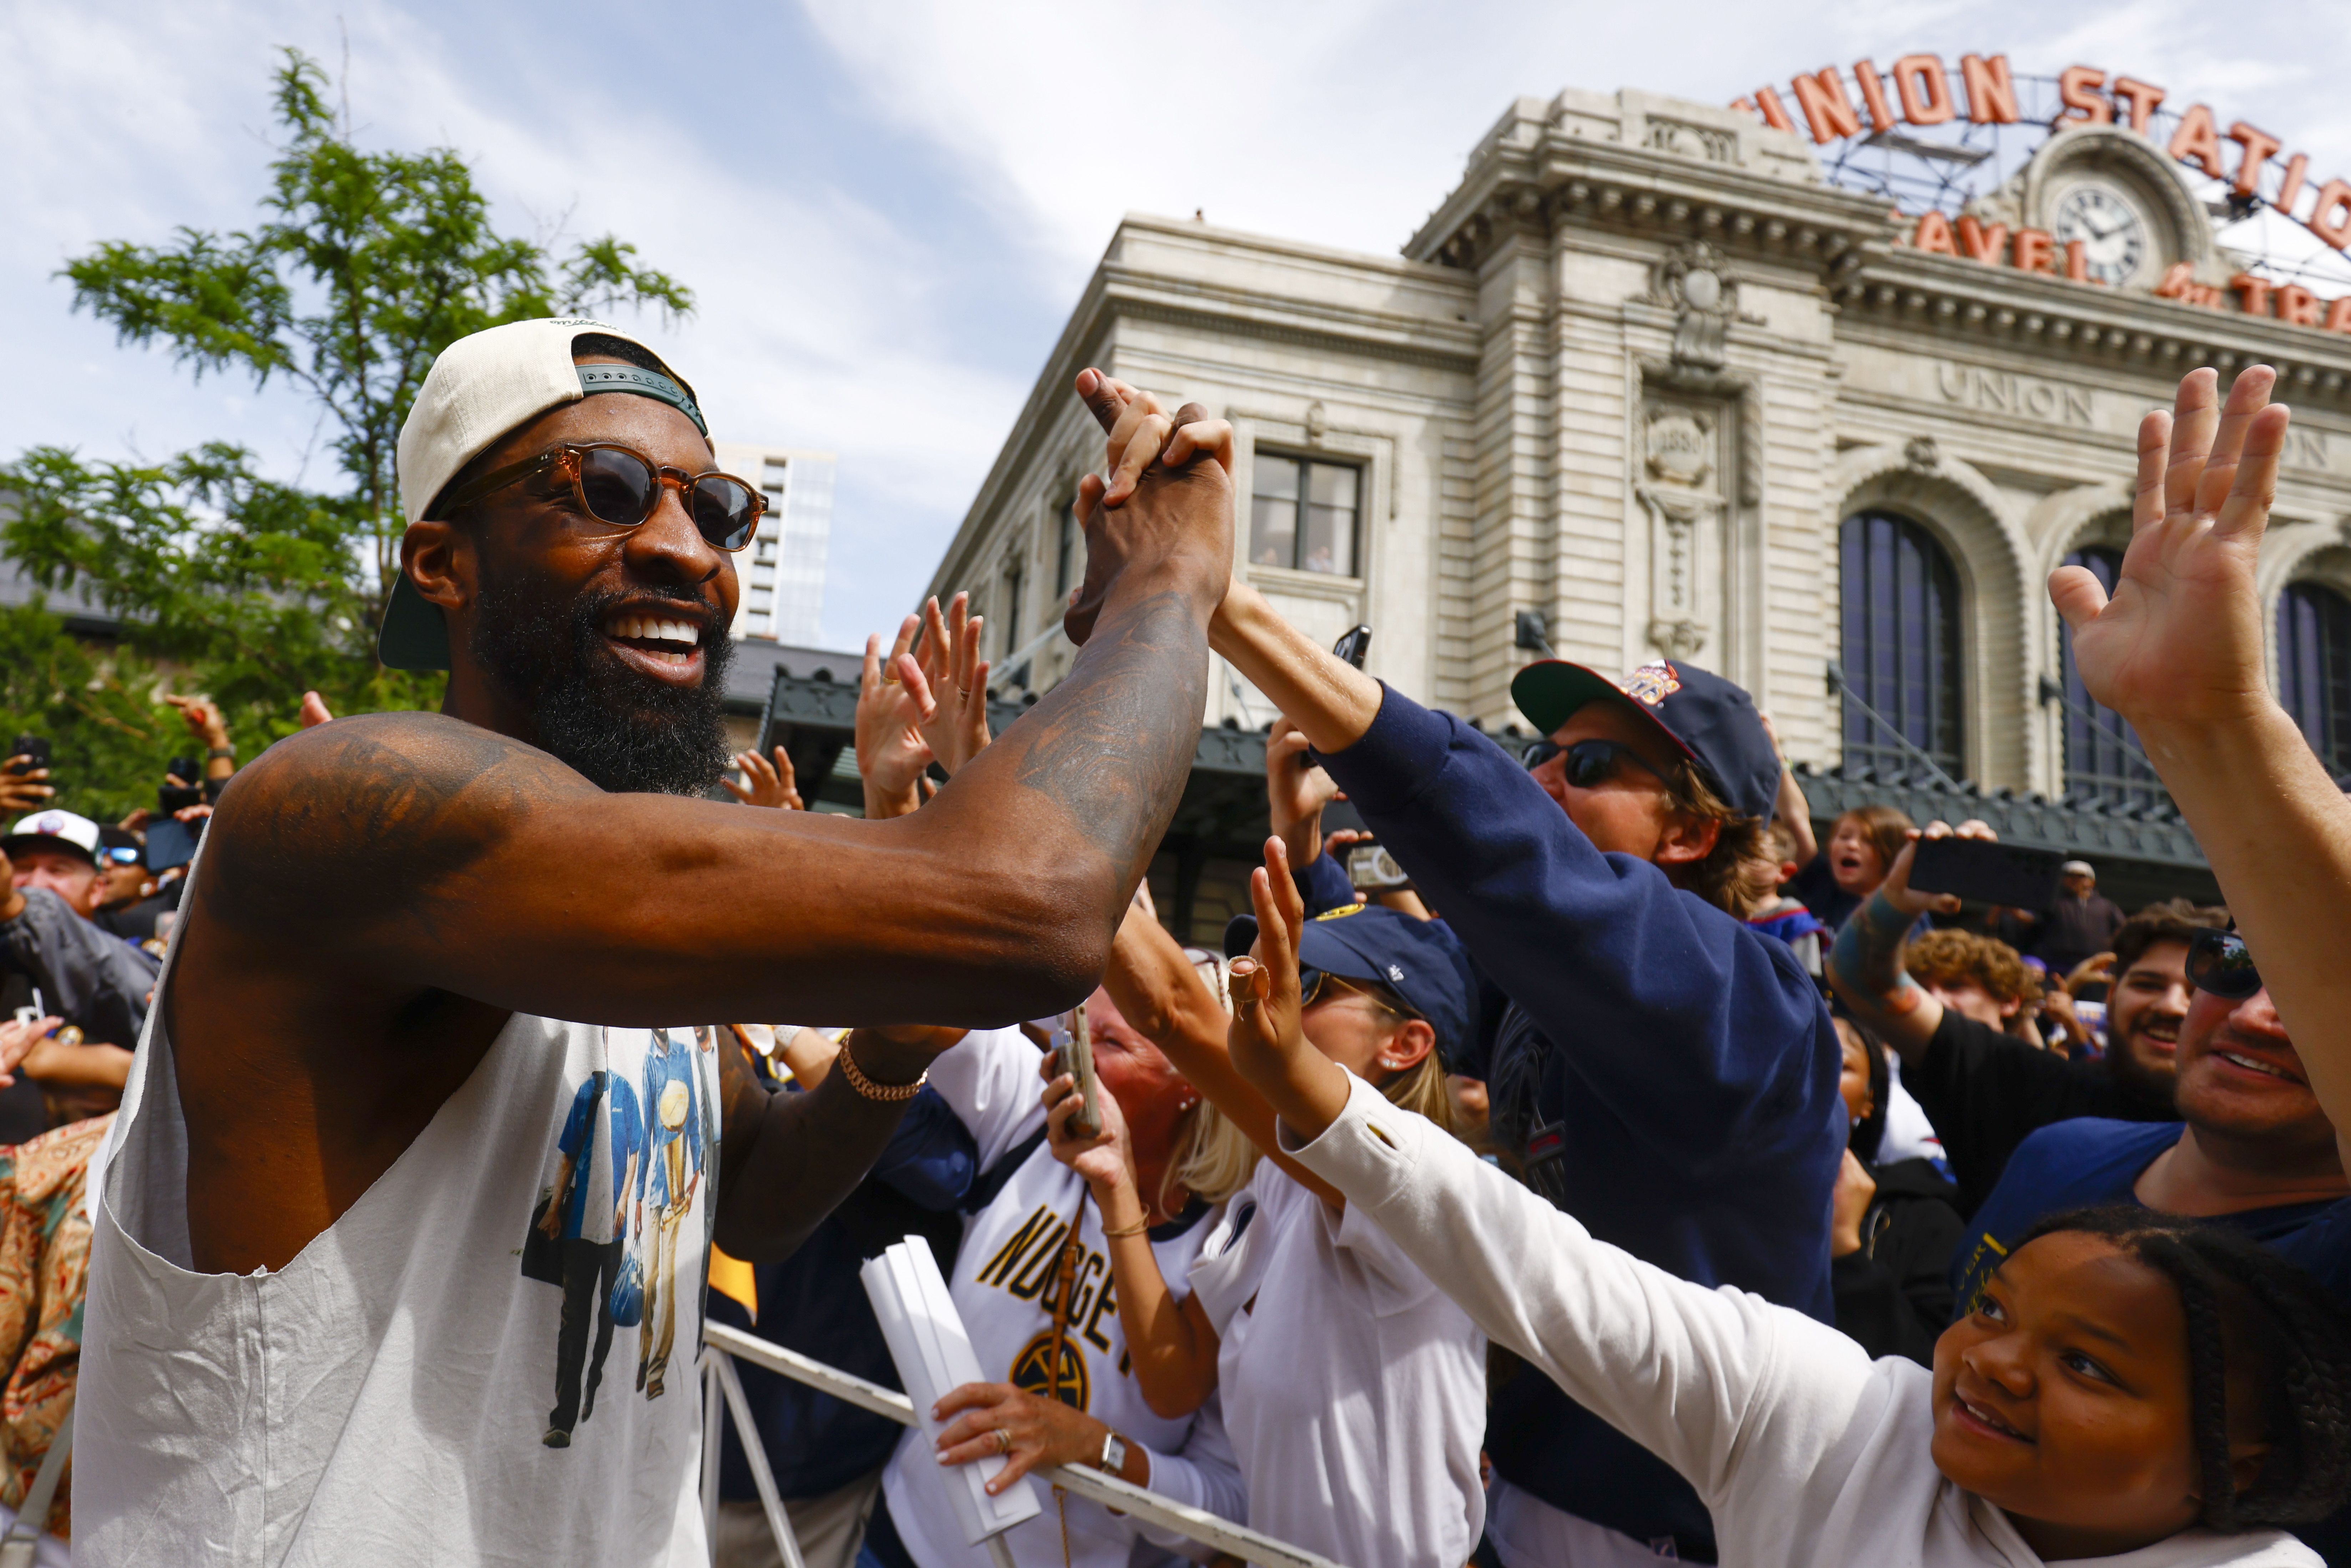 Thousands celebrate NBA champion Nuggets at parade